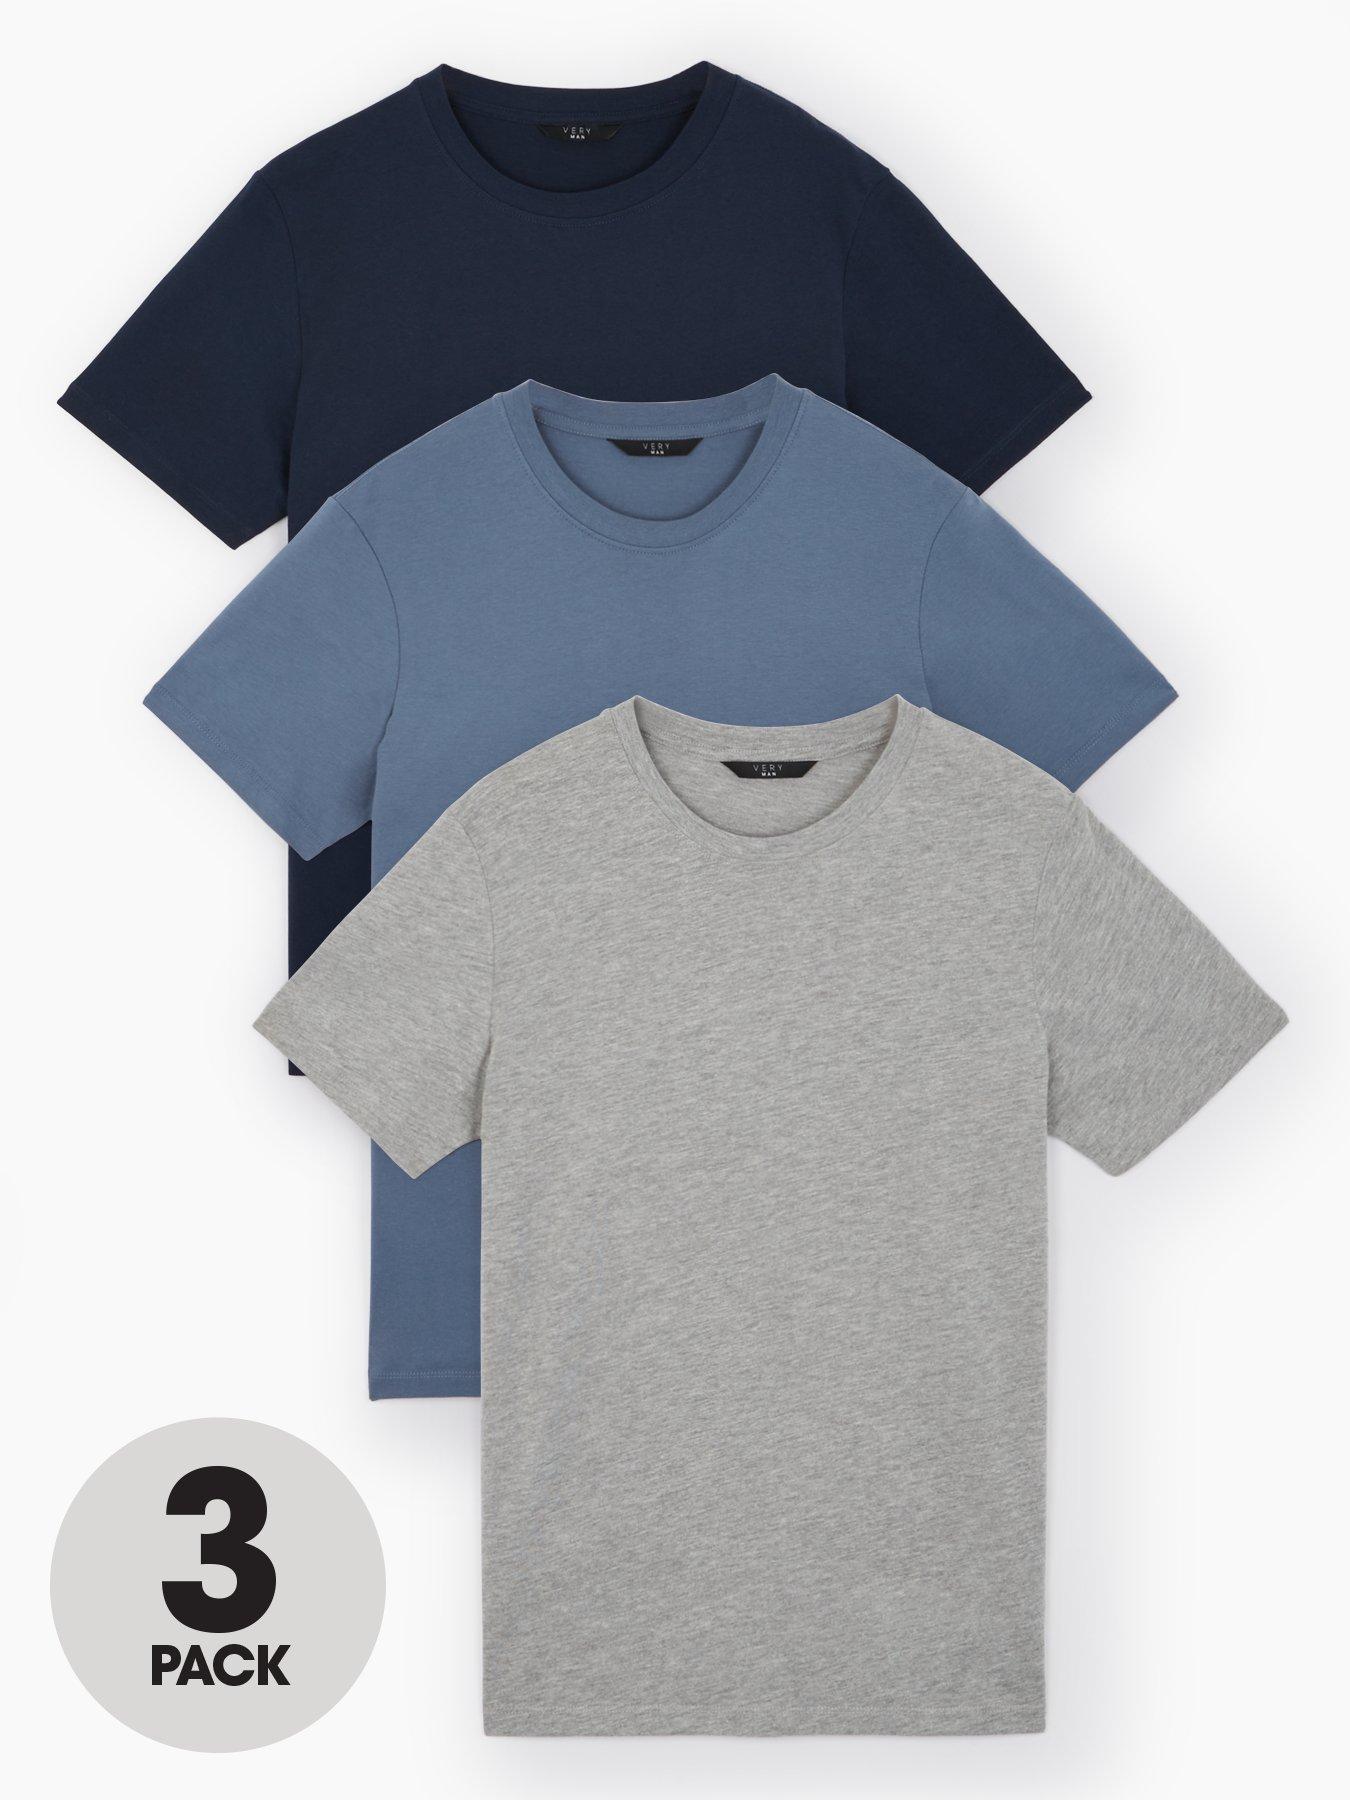 MEN FASHION Shirts & T-shirts NO STYLE discount 92% Primark T-shirt Gray M 